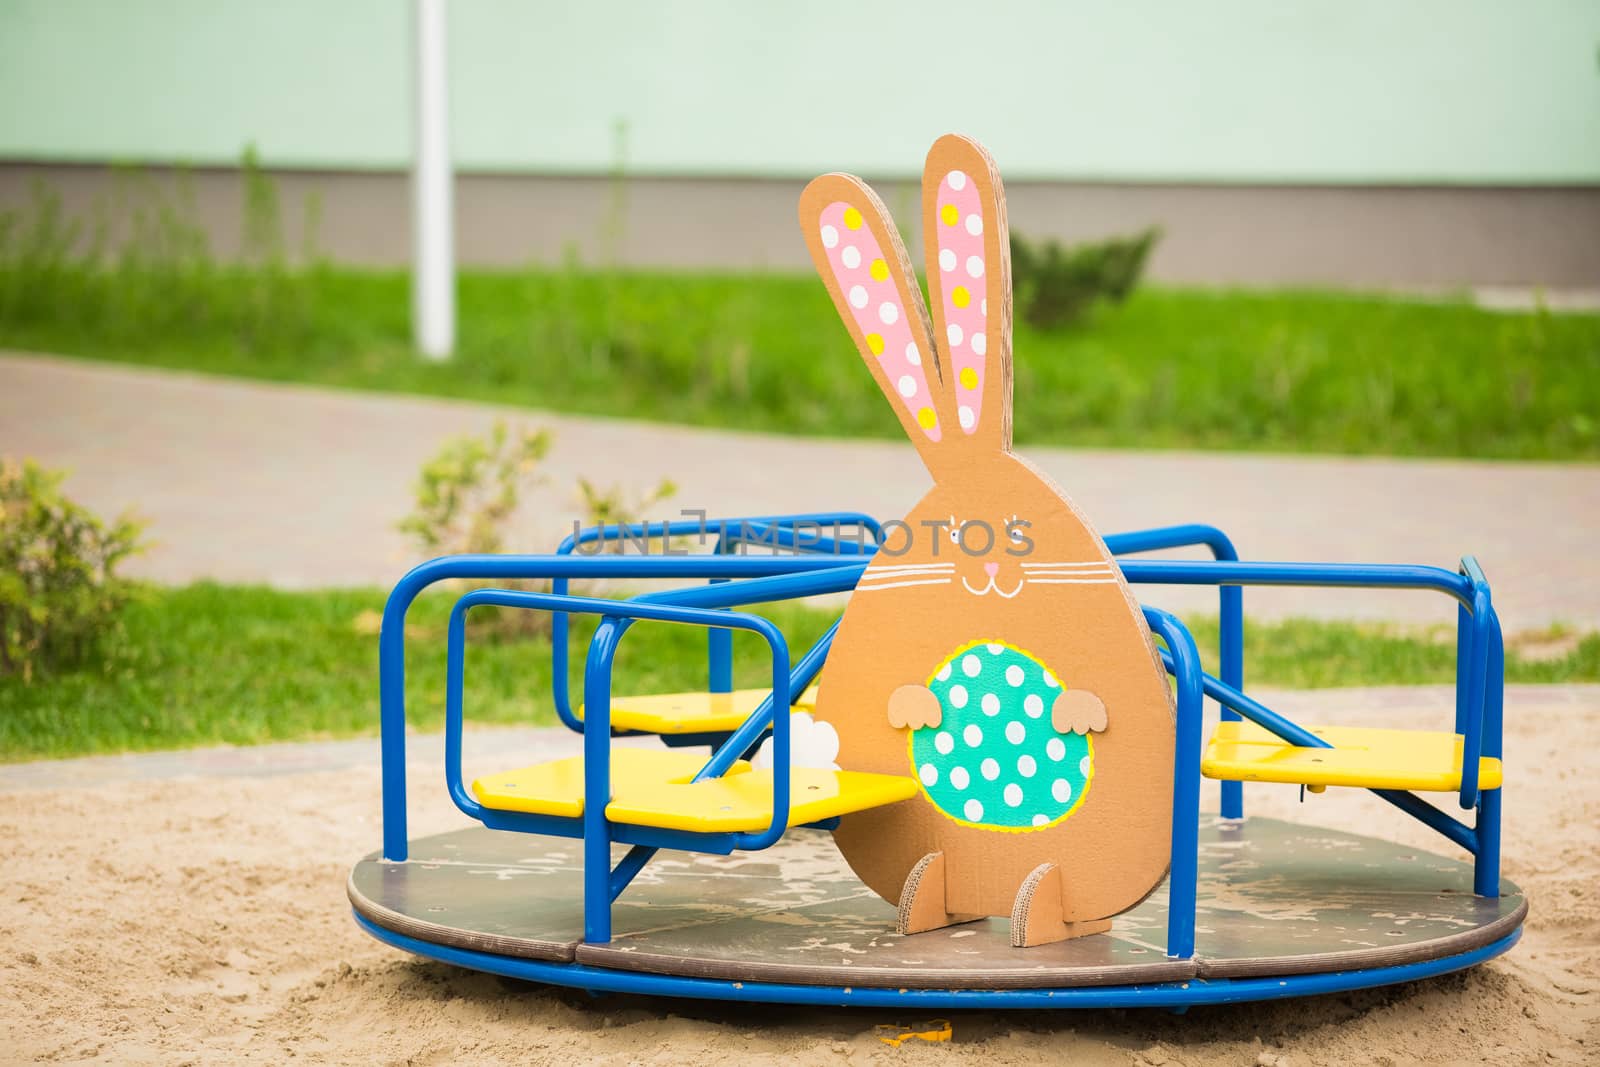 Decoration for Easter. Rabbit of cardboard in spring park